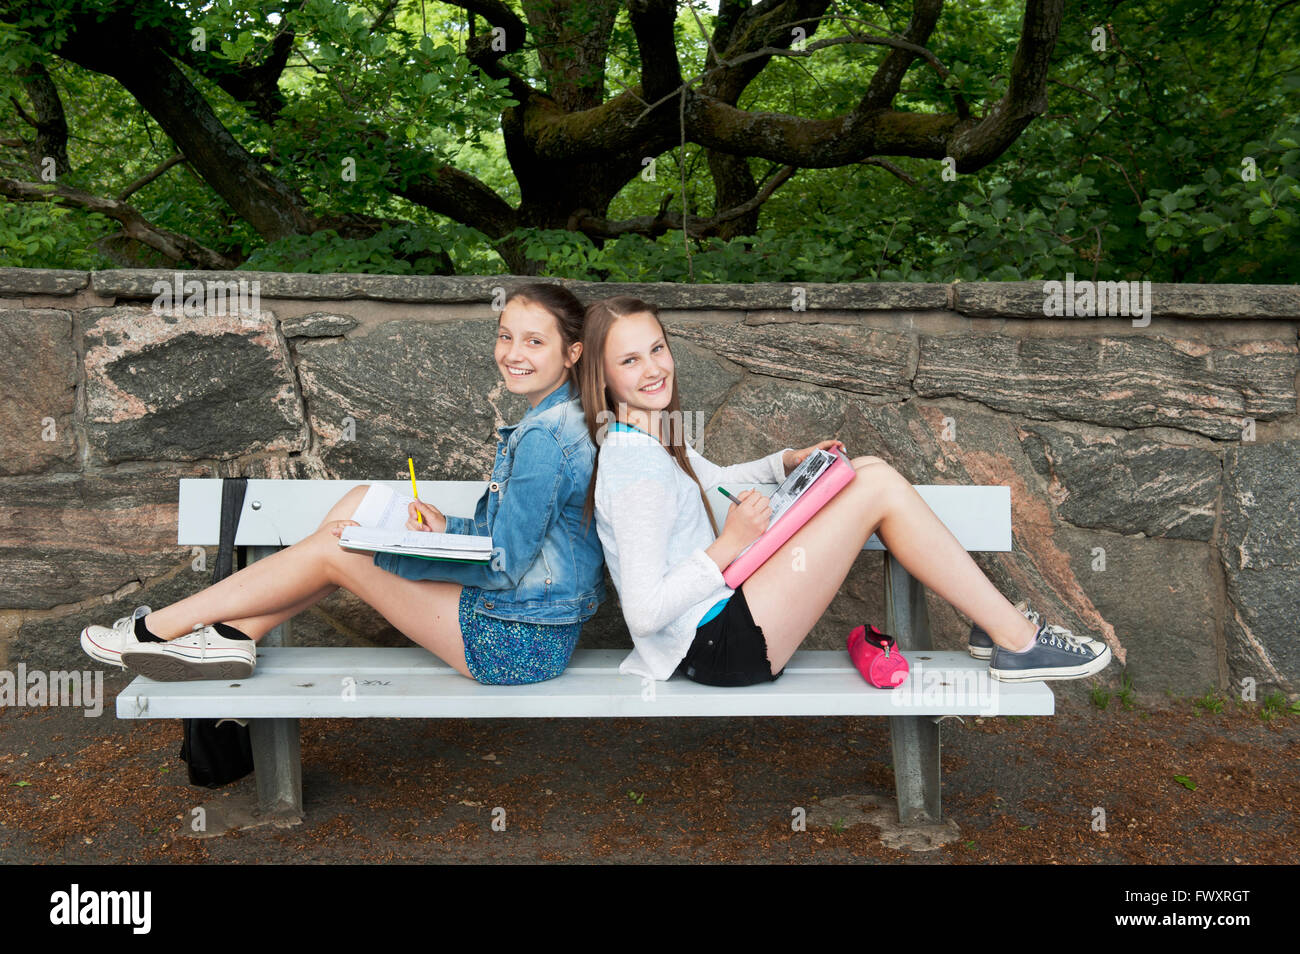 Sweden, Vastra Gotaland, Gothenburg, Two girls (14-15) sitting on bench back to back Stock Photo